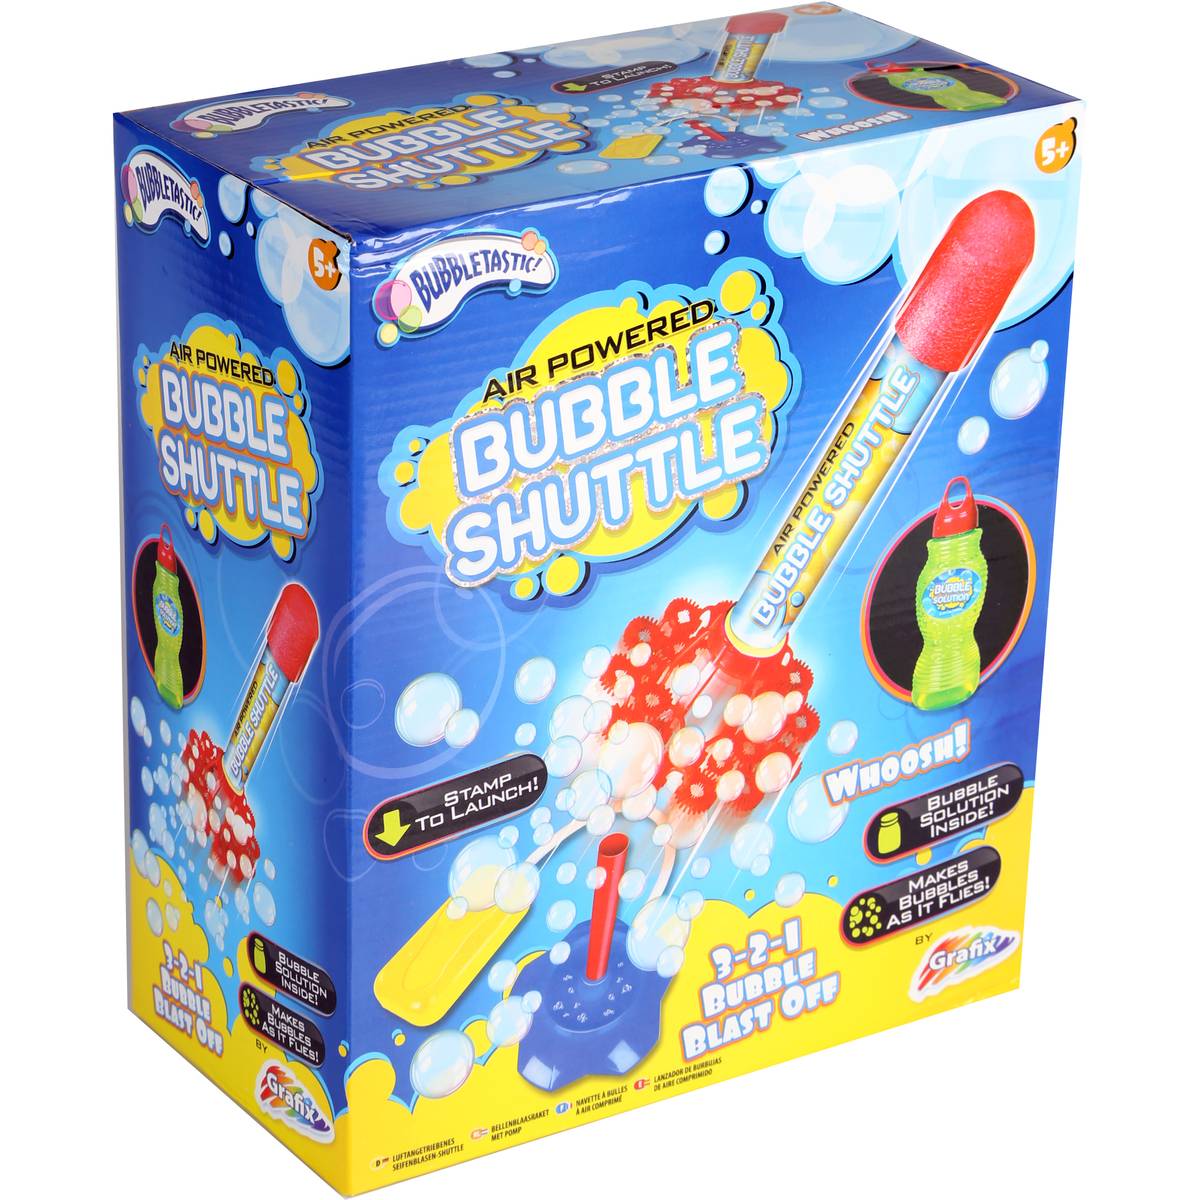 bubble rocket